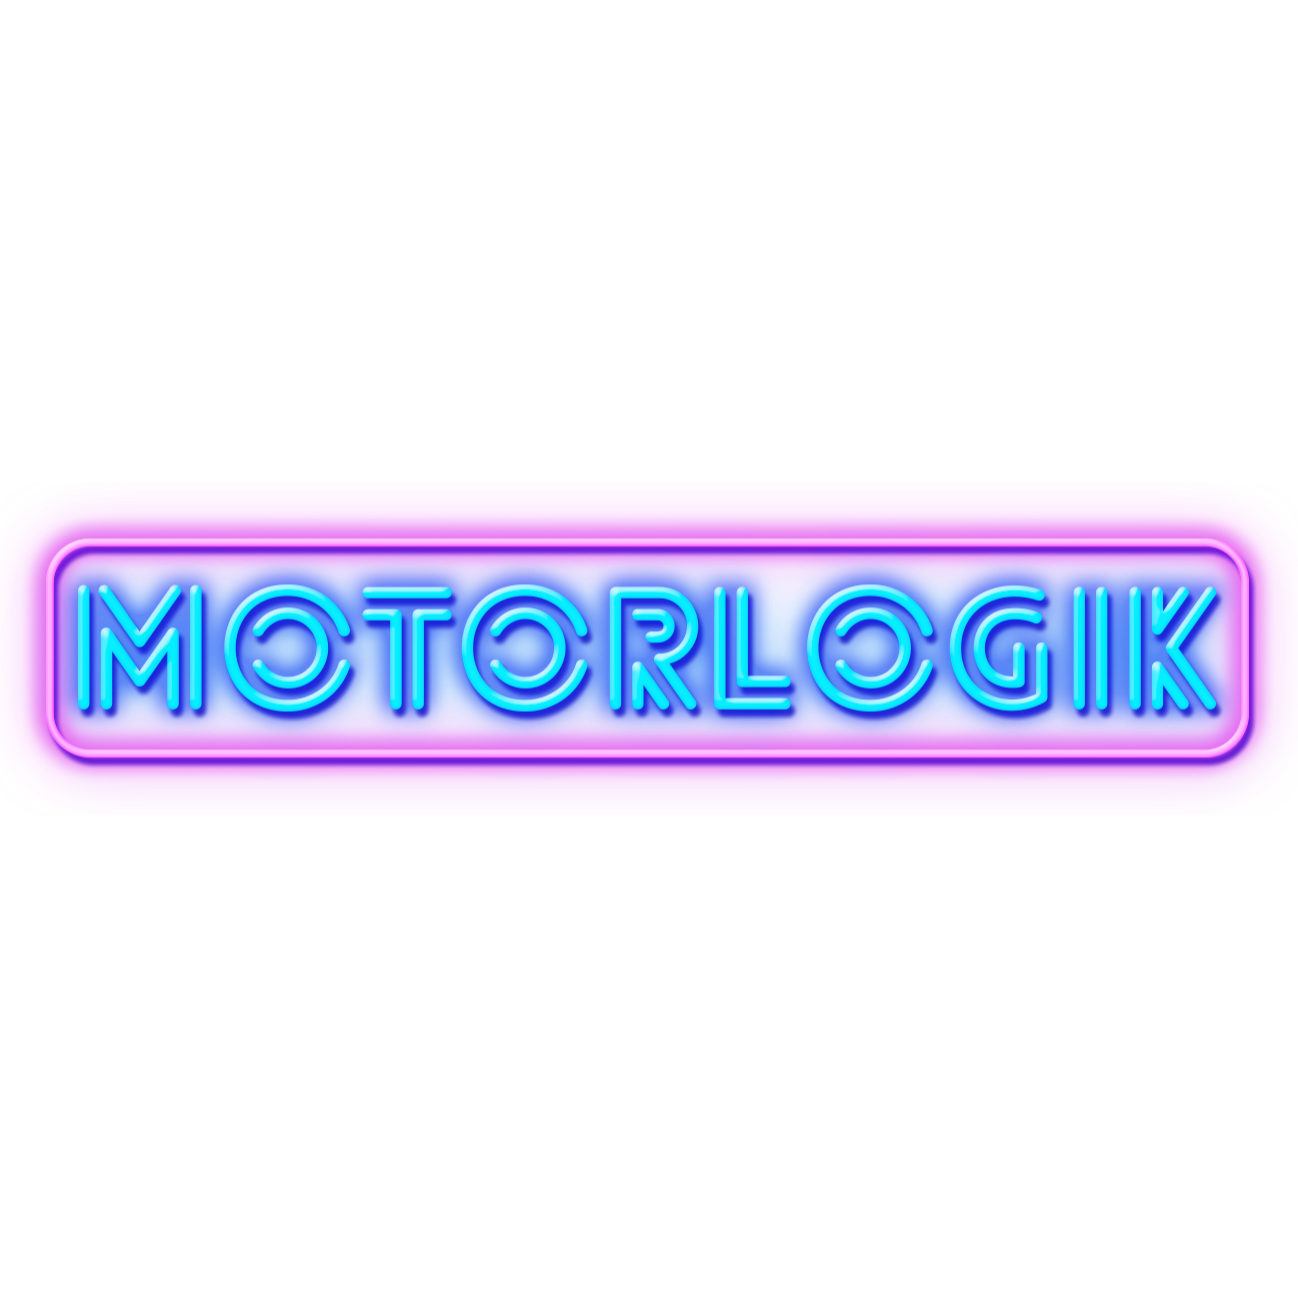 MotorLogik - Riverside, CA 92504 - (951)405-0222 | ShowMeLocal.com